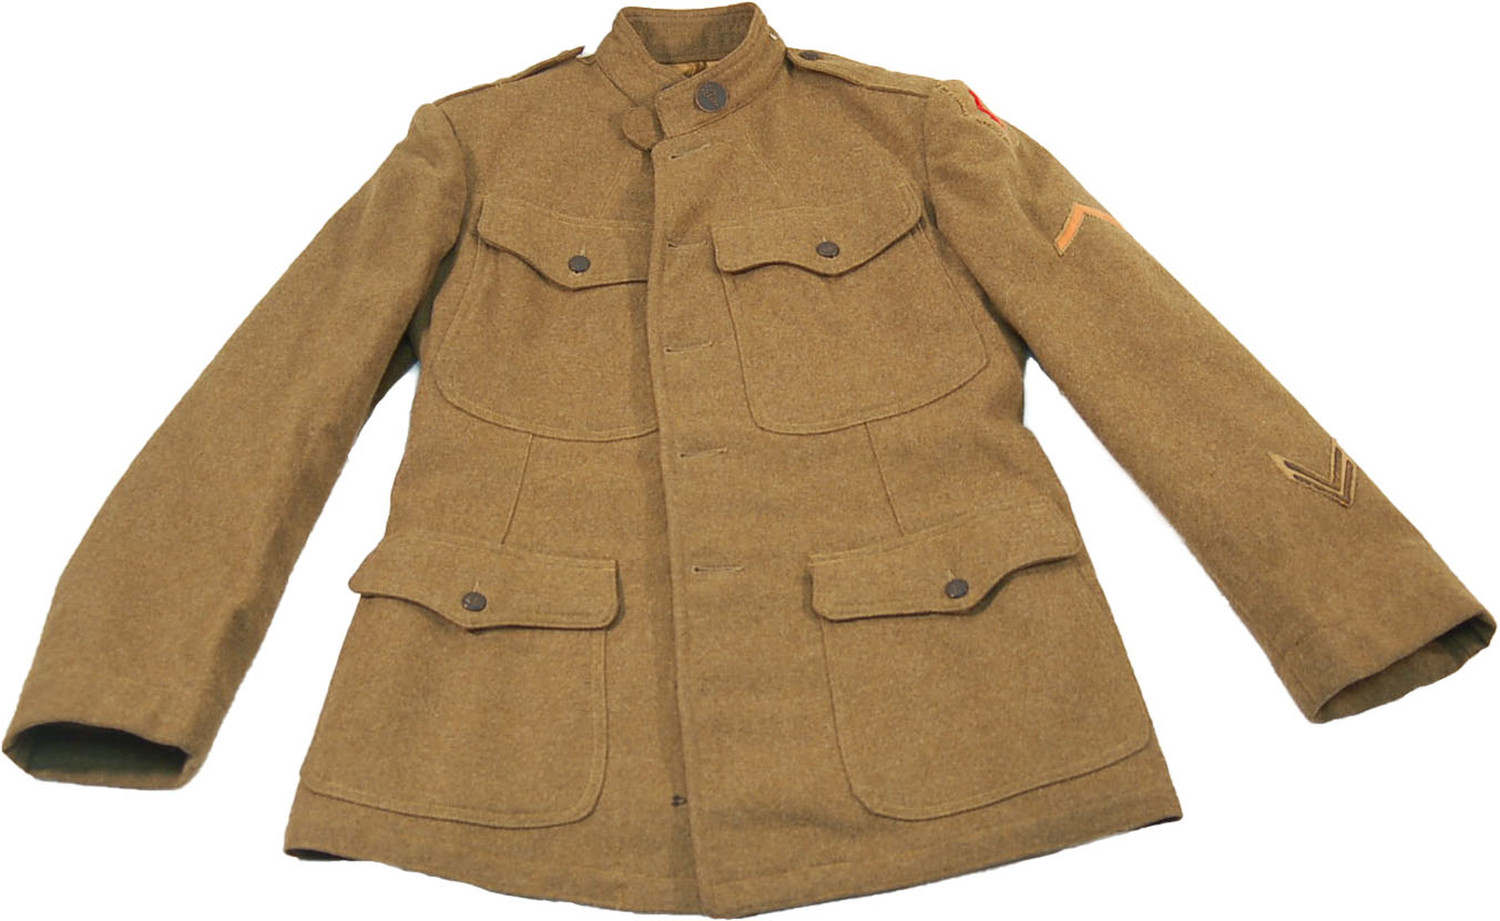 V. Raymond Edman's WWI Army Uniform